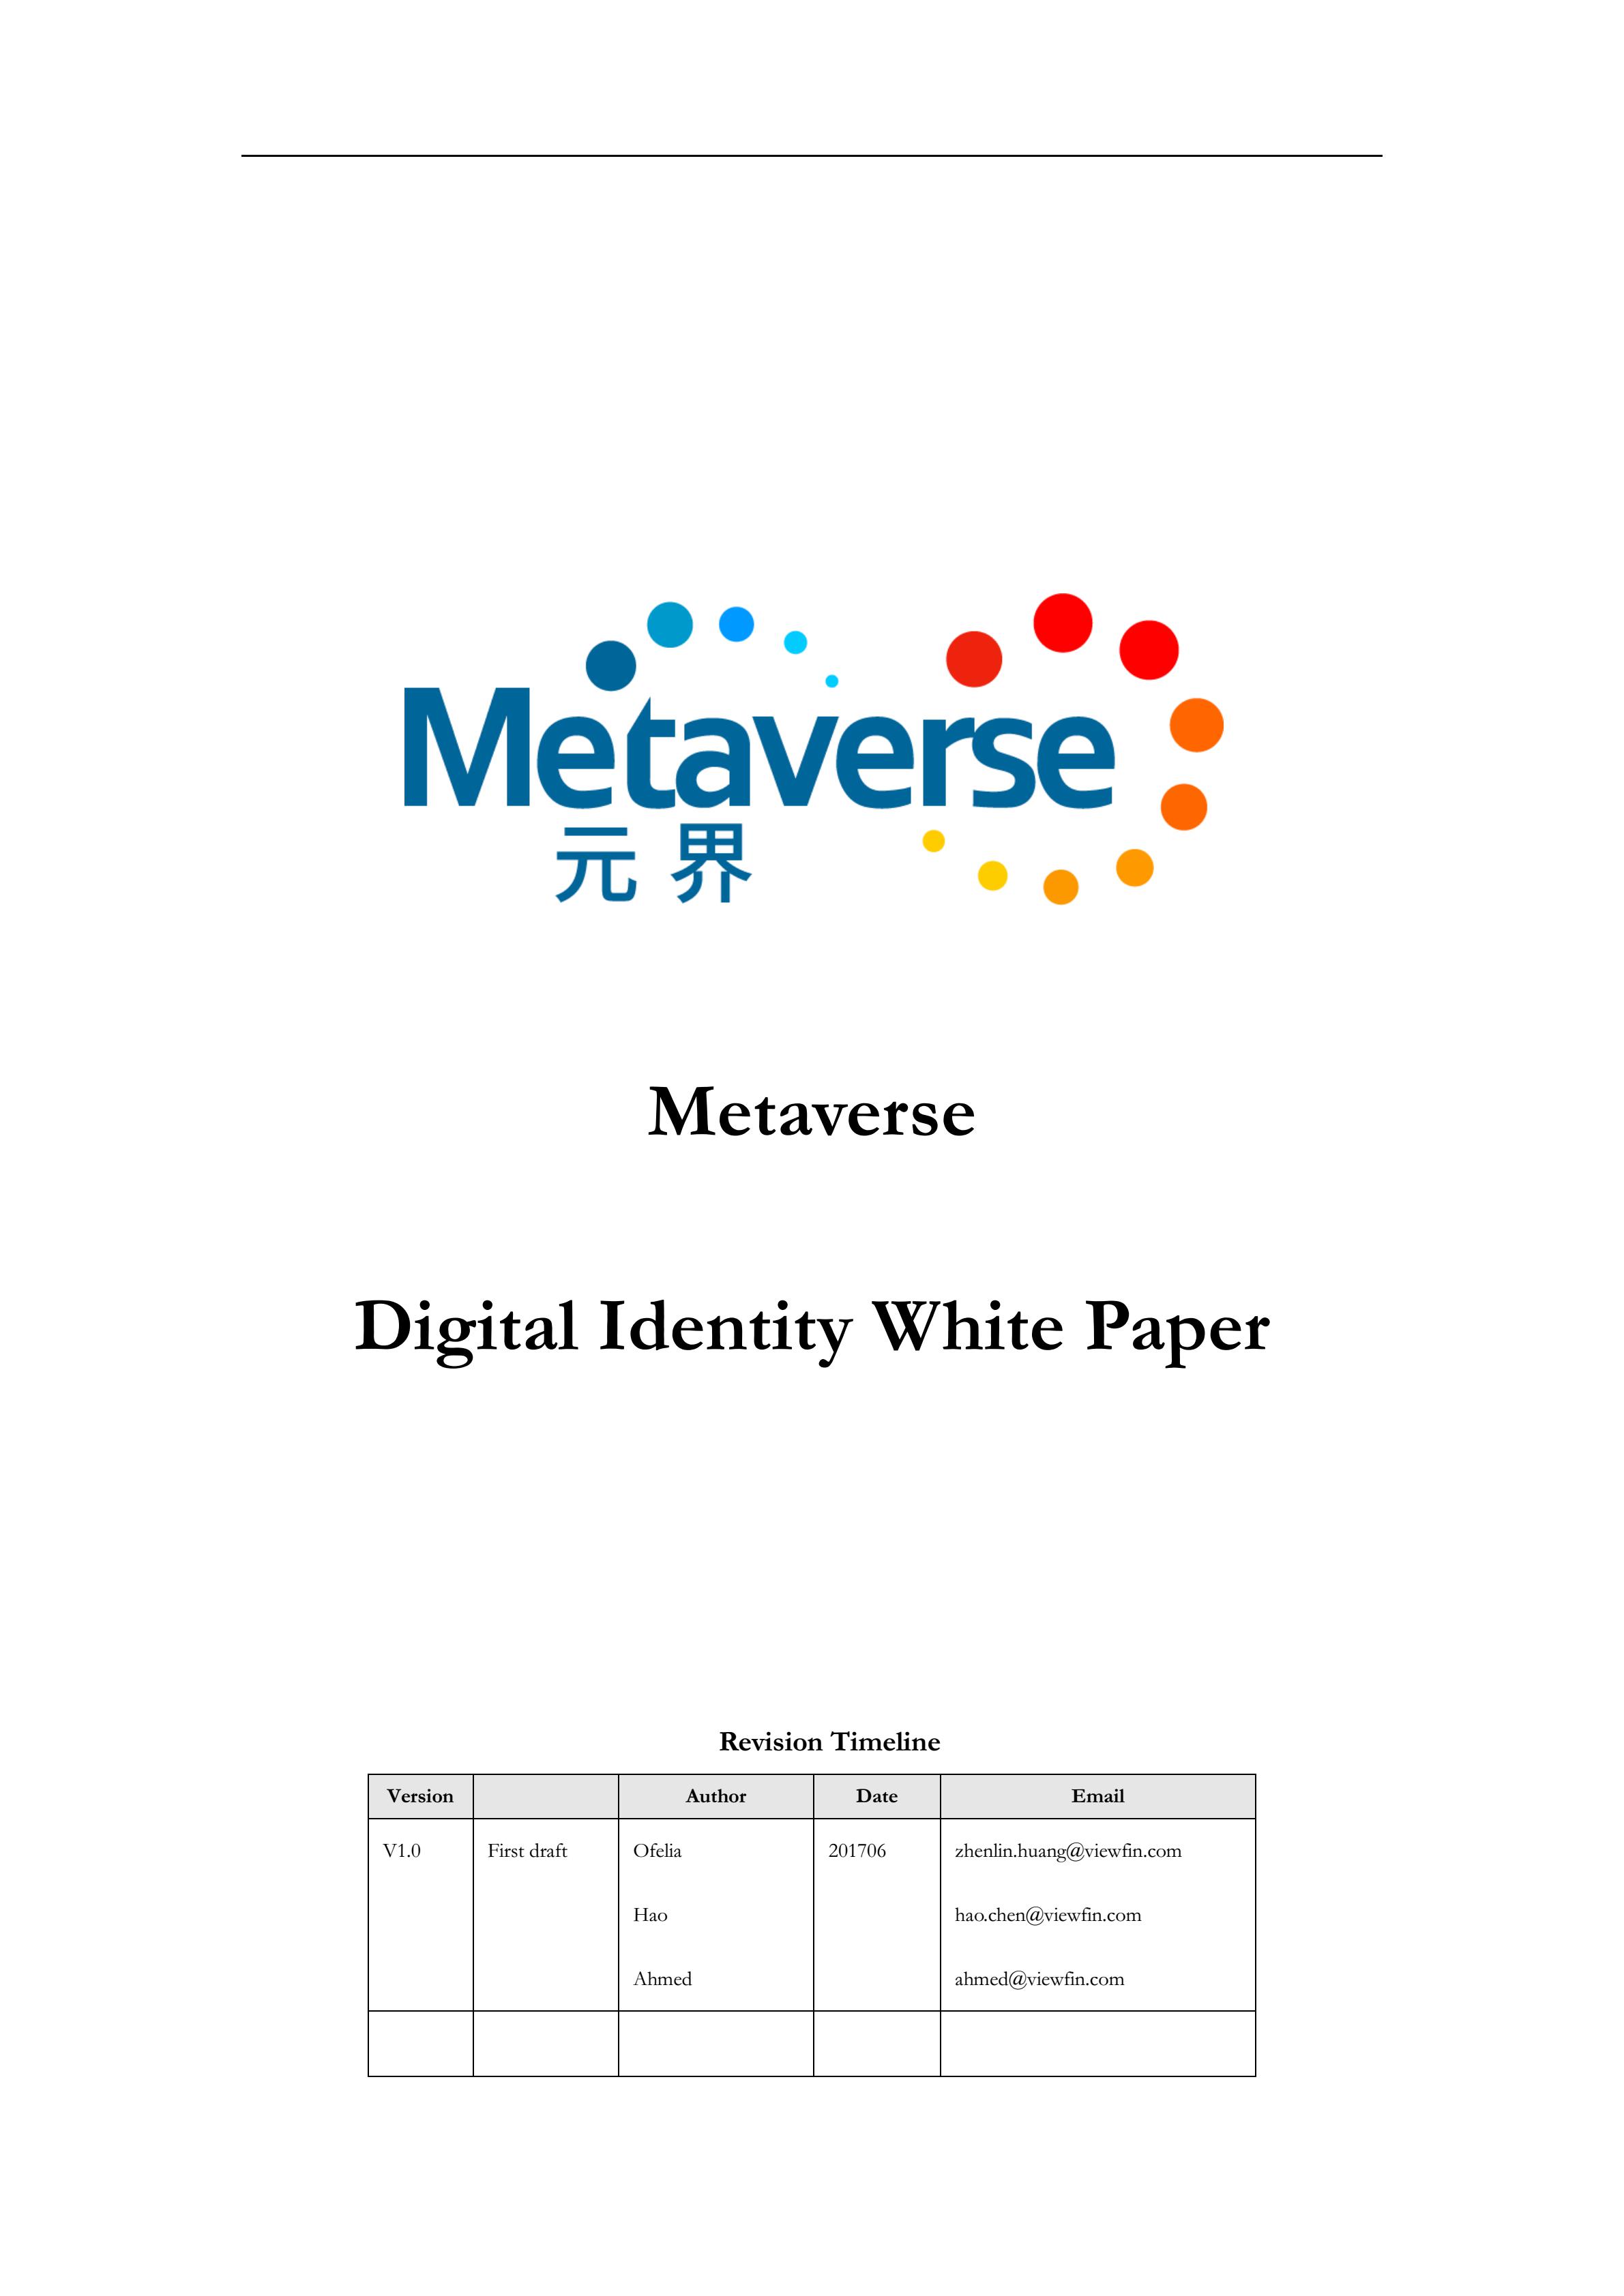 ETP_Metaverse-digital-identity-white-paper-v1.0-EN_00.jpg